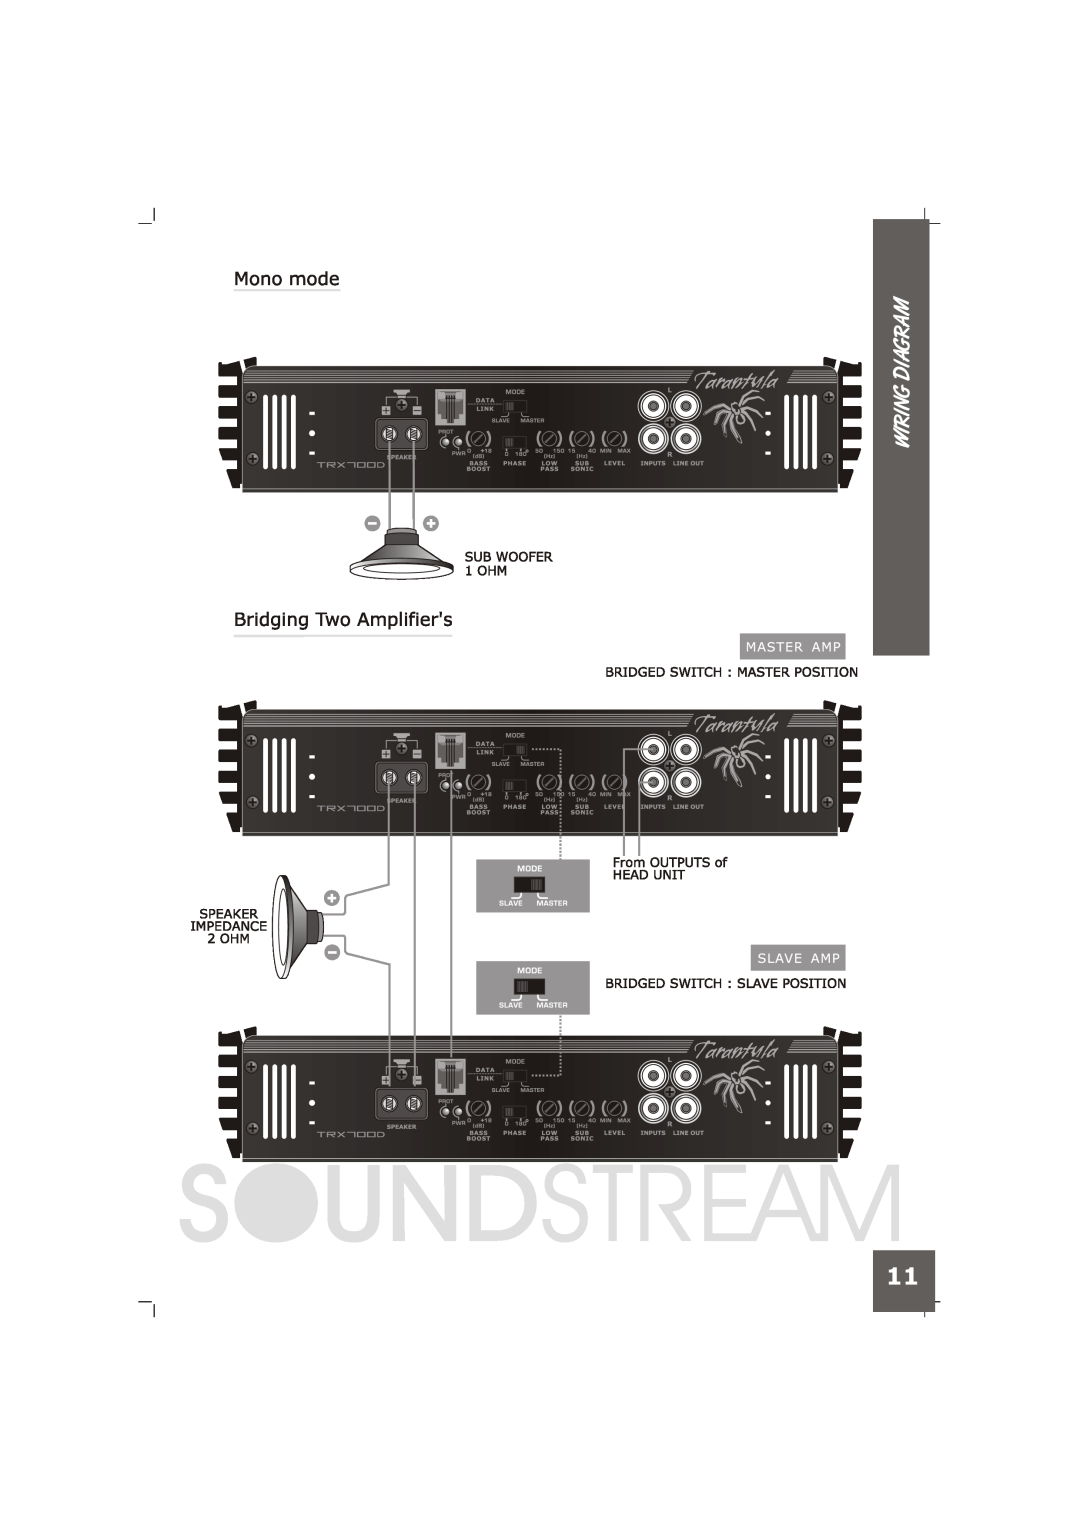 Soundstream Technologies TRX10000, TRX7000, TRX20000, TRX15000 manual 